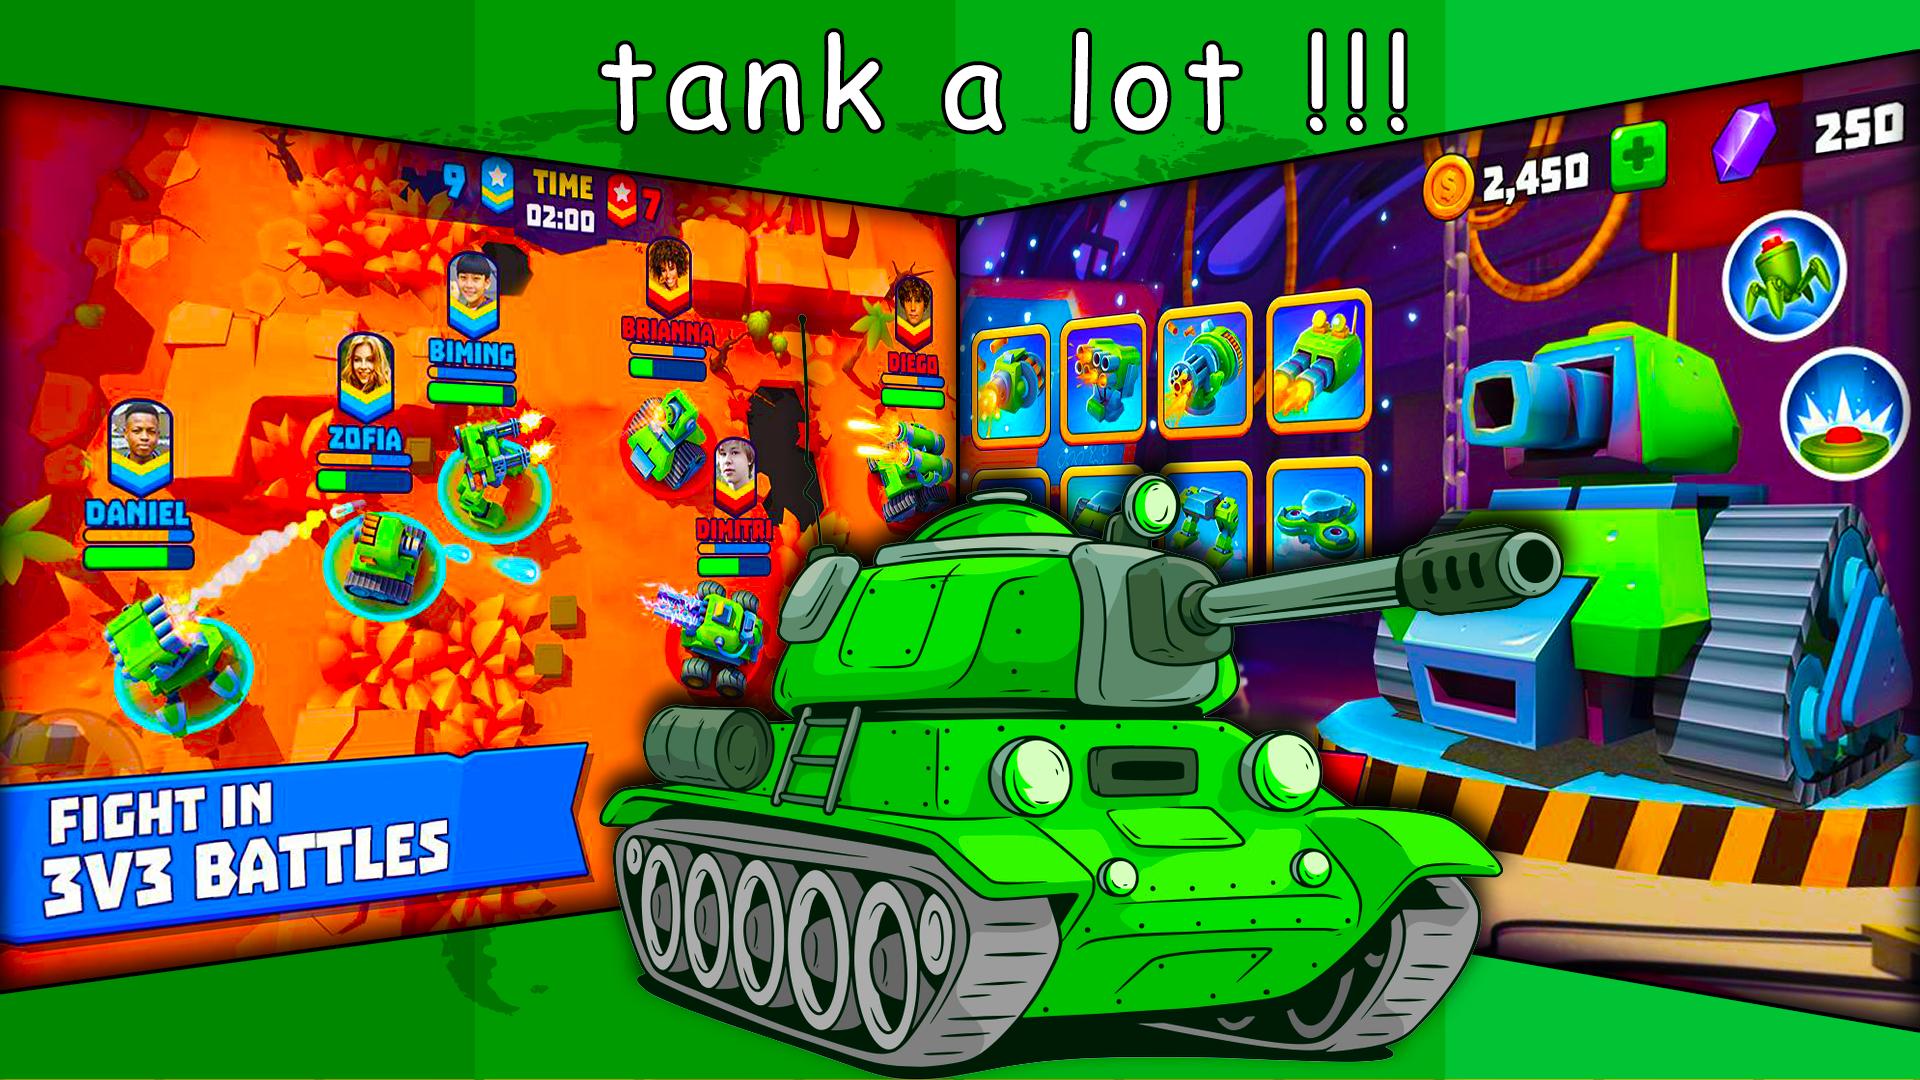 Tanks a Lot 